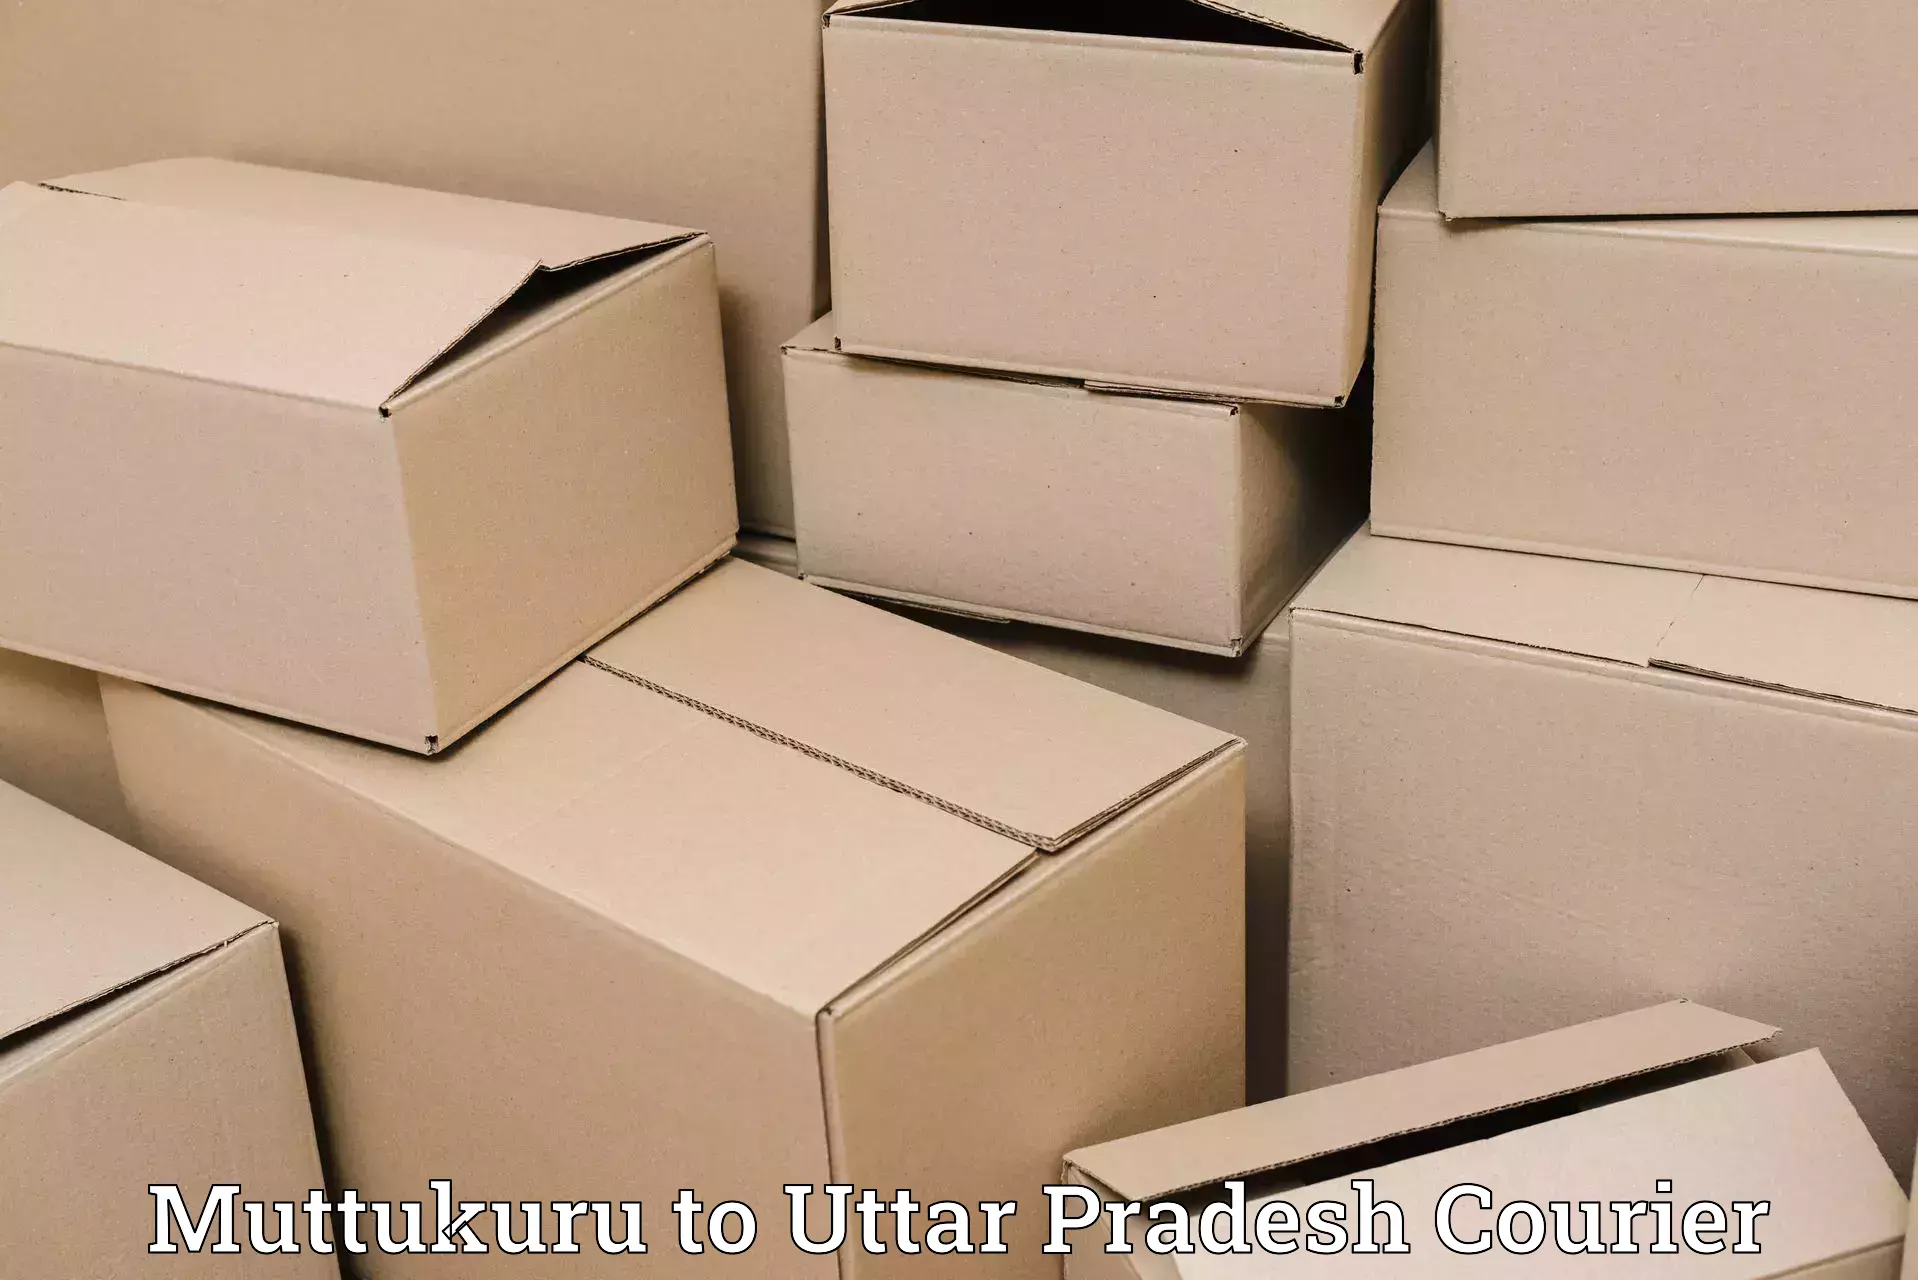 Cash on delivery service Muttukuru to Deoria